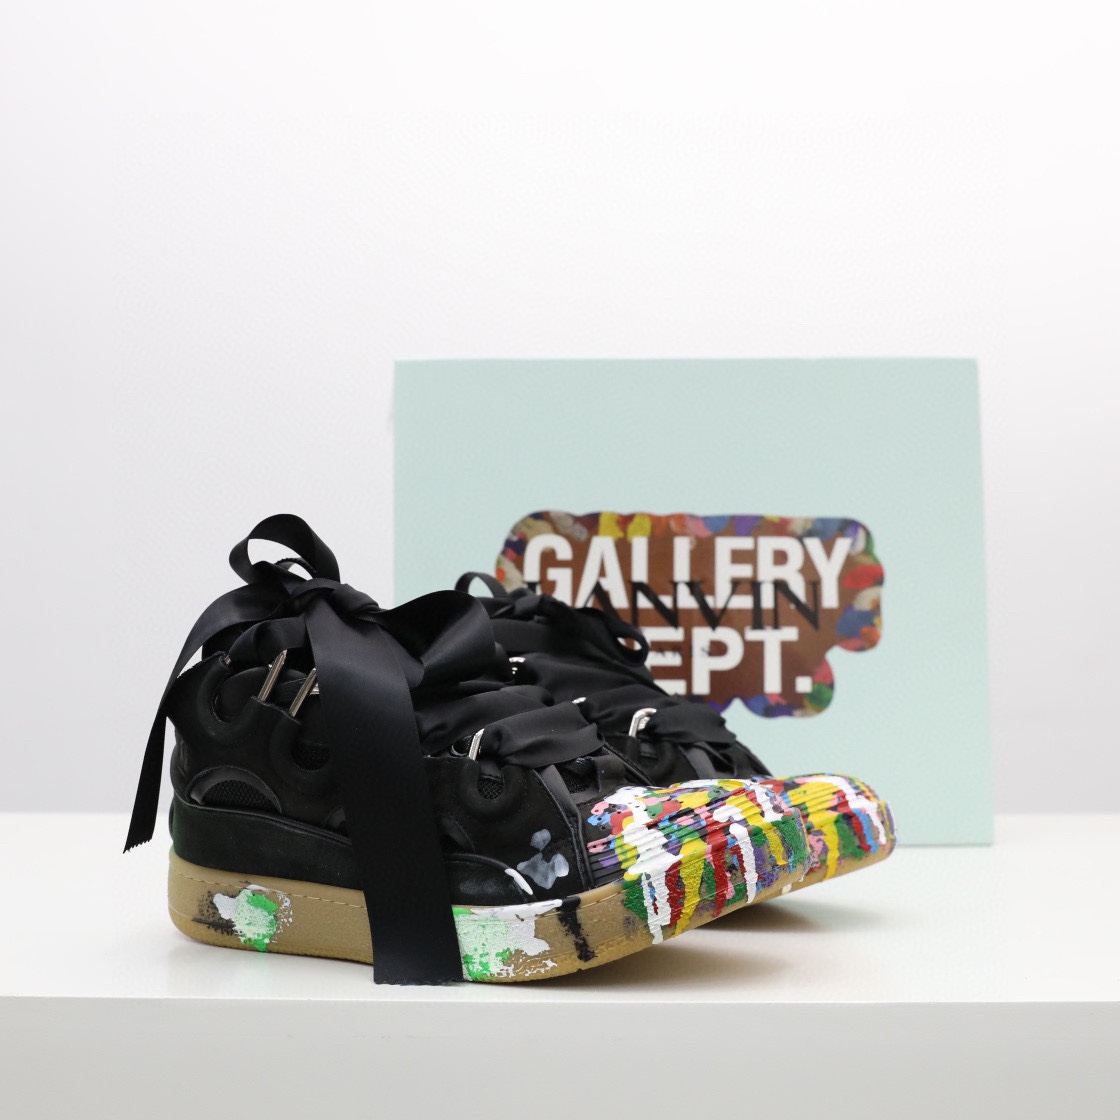 Lanvin X  Gallery Dept. Curb Sneaker  - DesignerGu